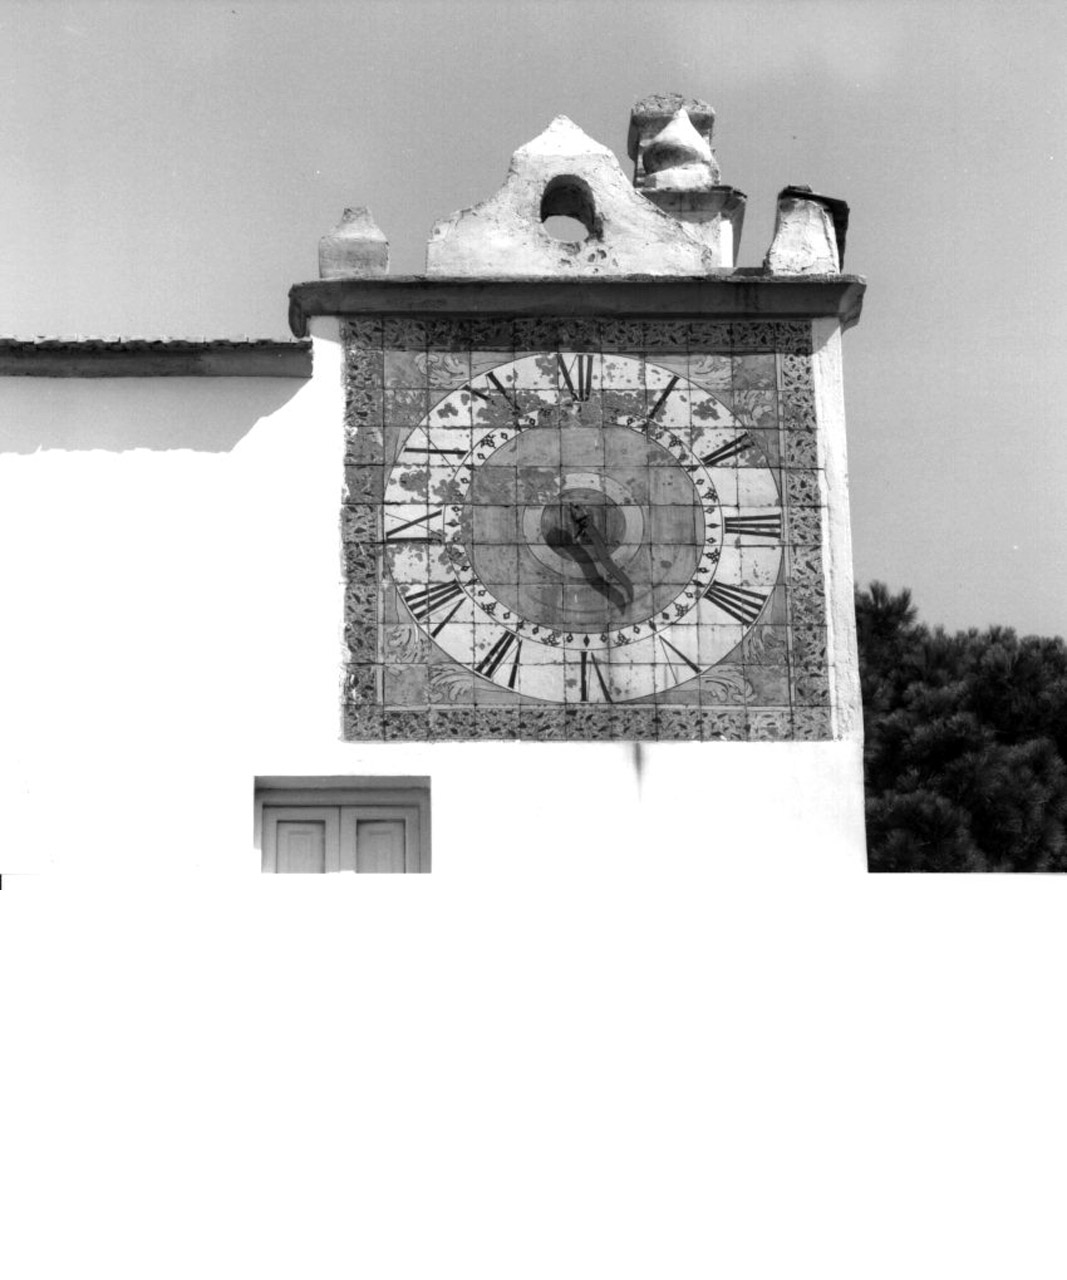 mostra d'orologio - BOTTEGA NAPOLETANA (ULTIMO QUARTO sec. XVIII)